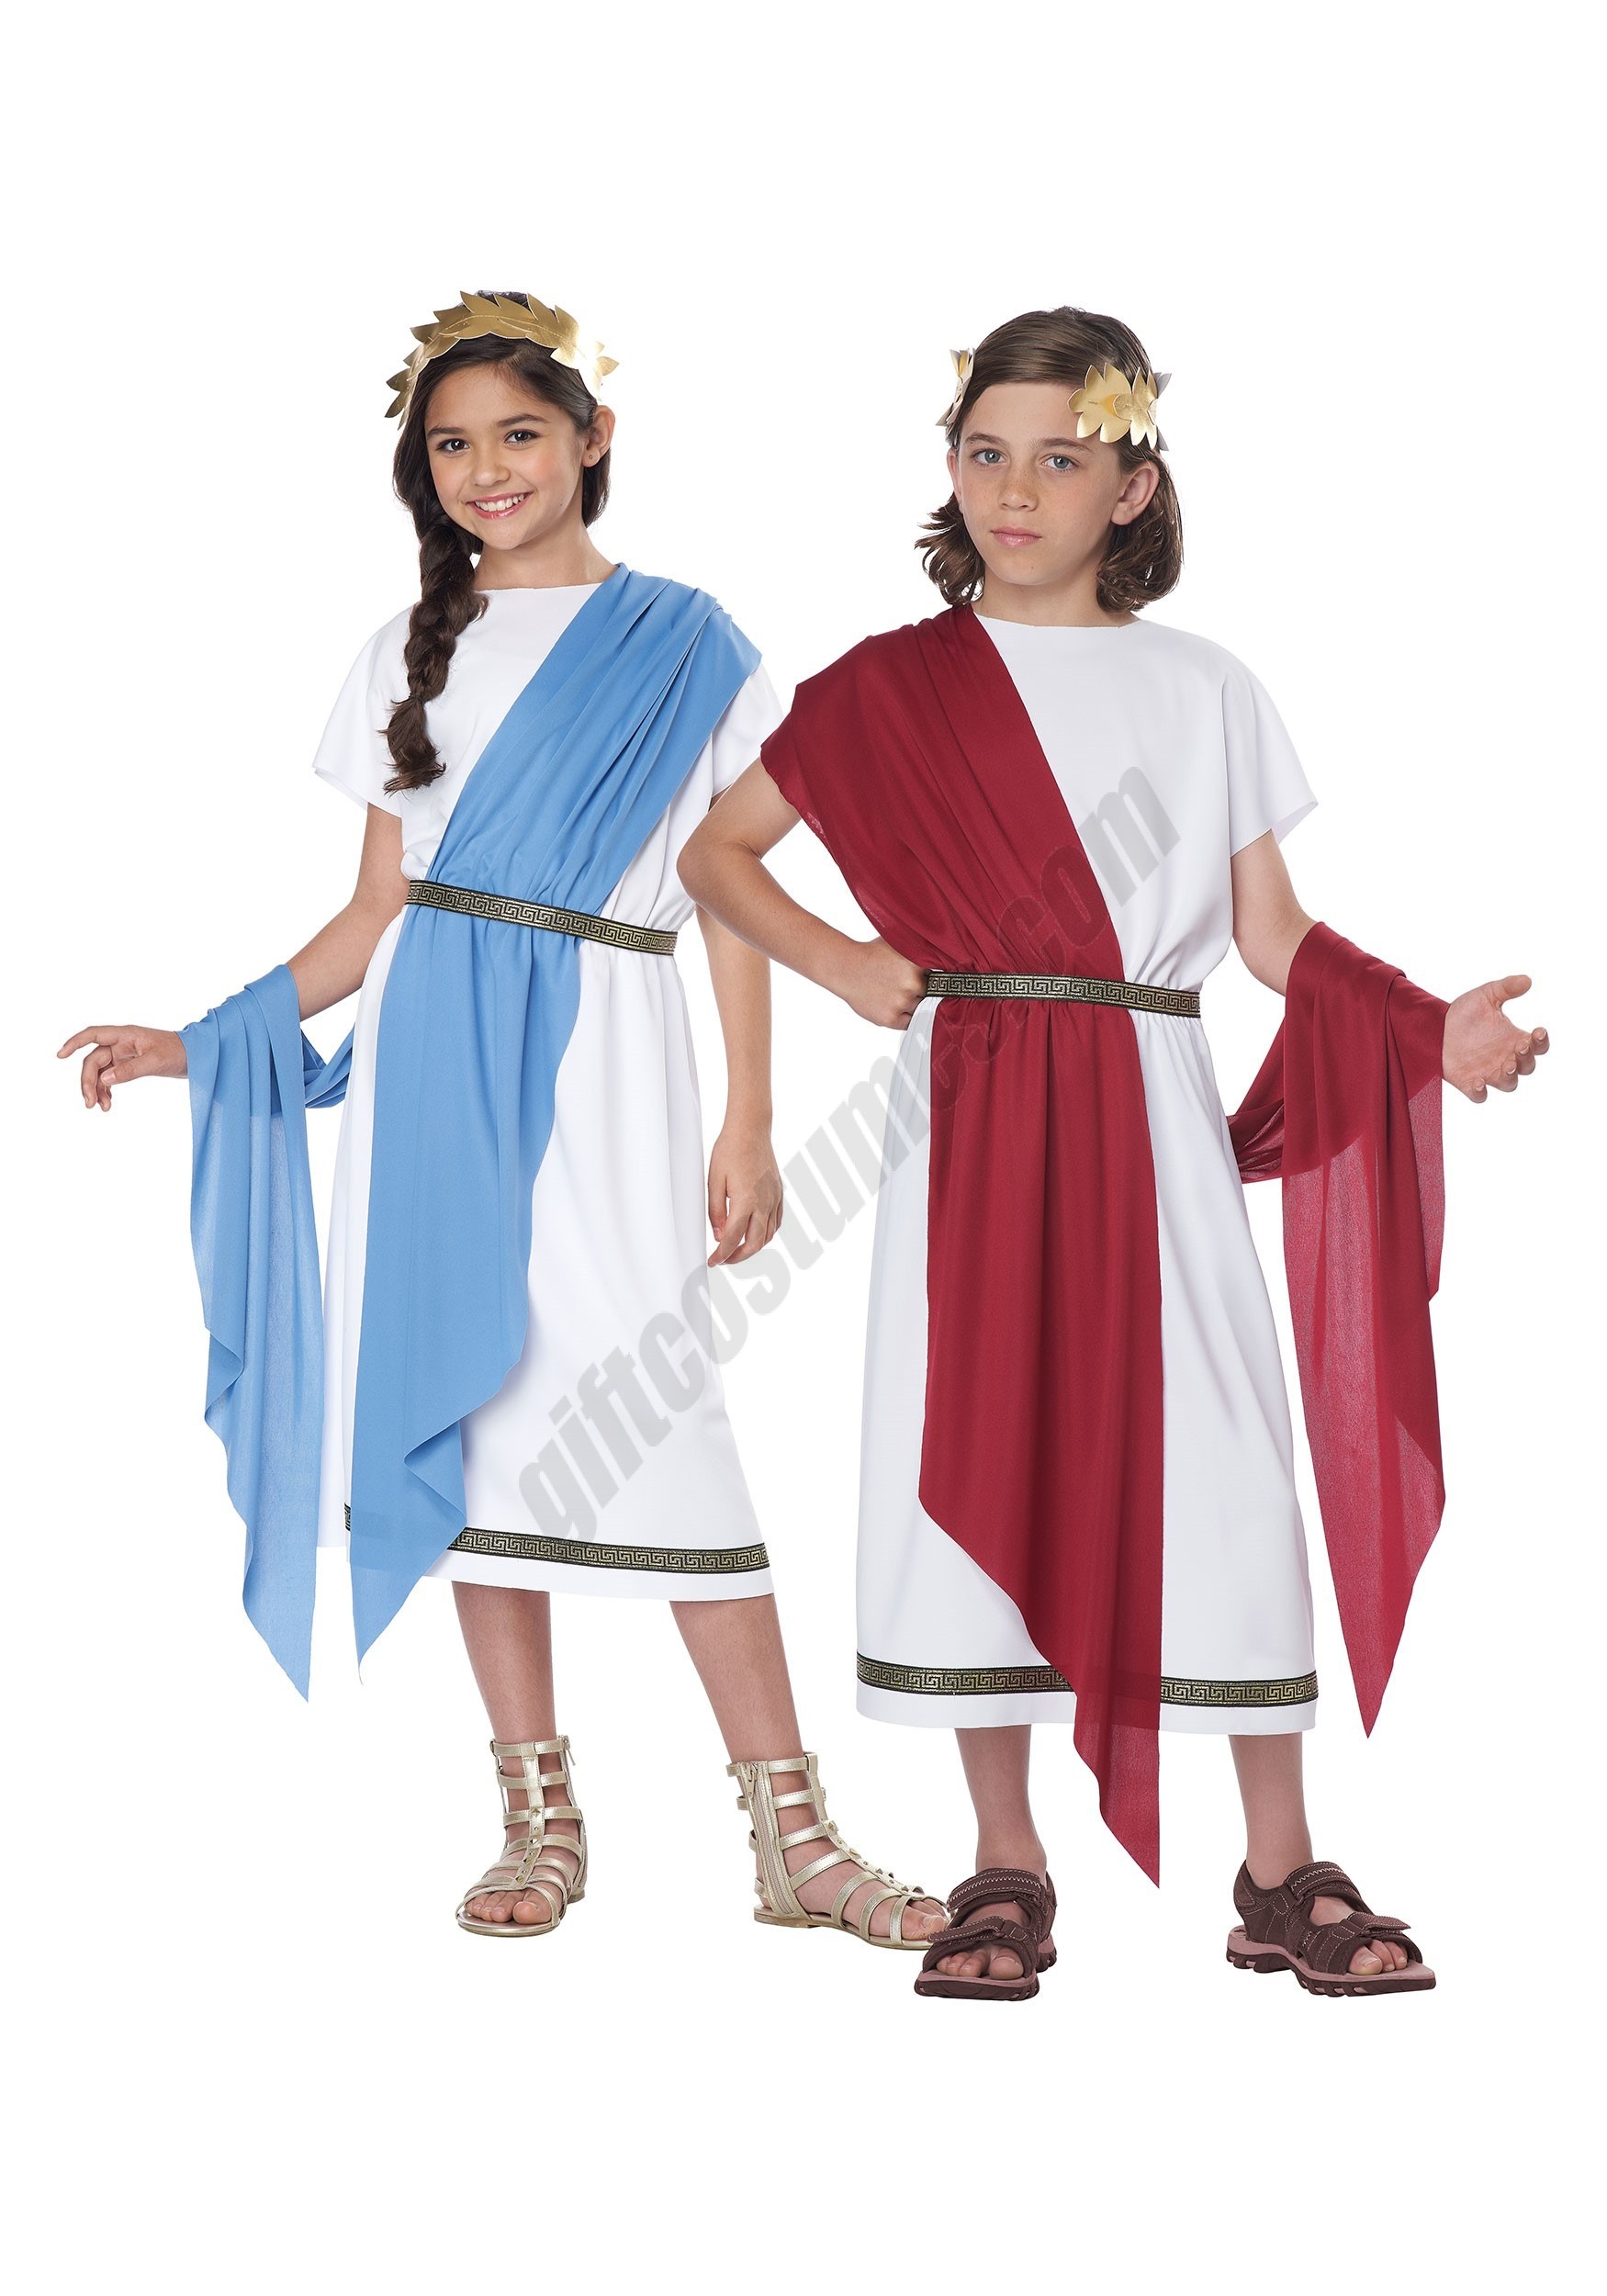 Kid's Grecian Toga Costume Promotions - Kid's Grecian Toga Costume Promotions